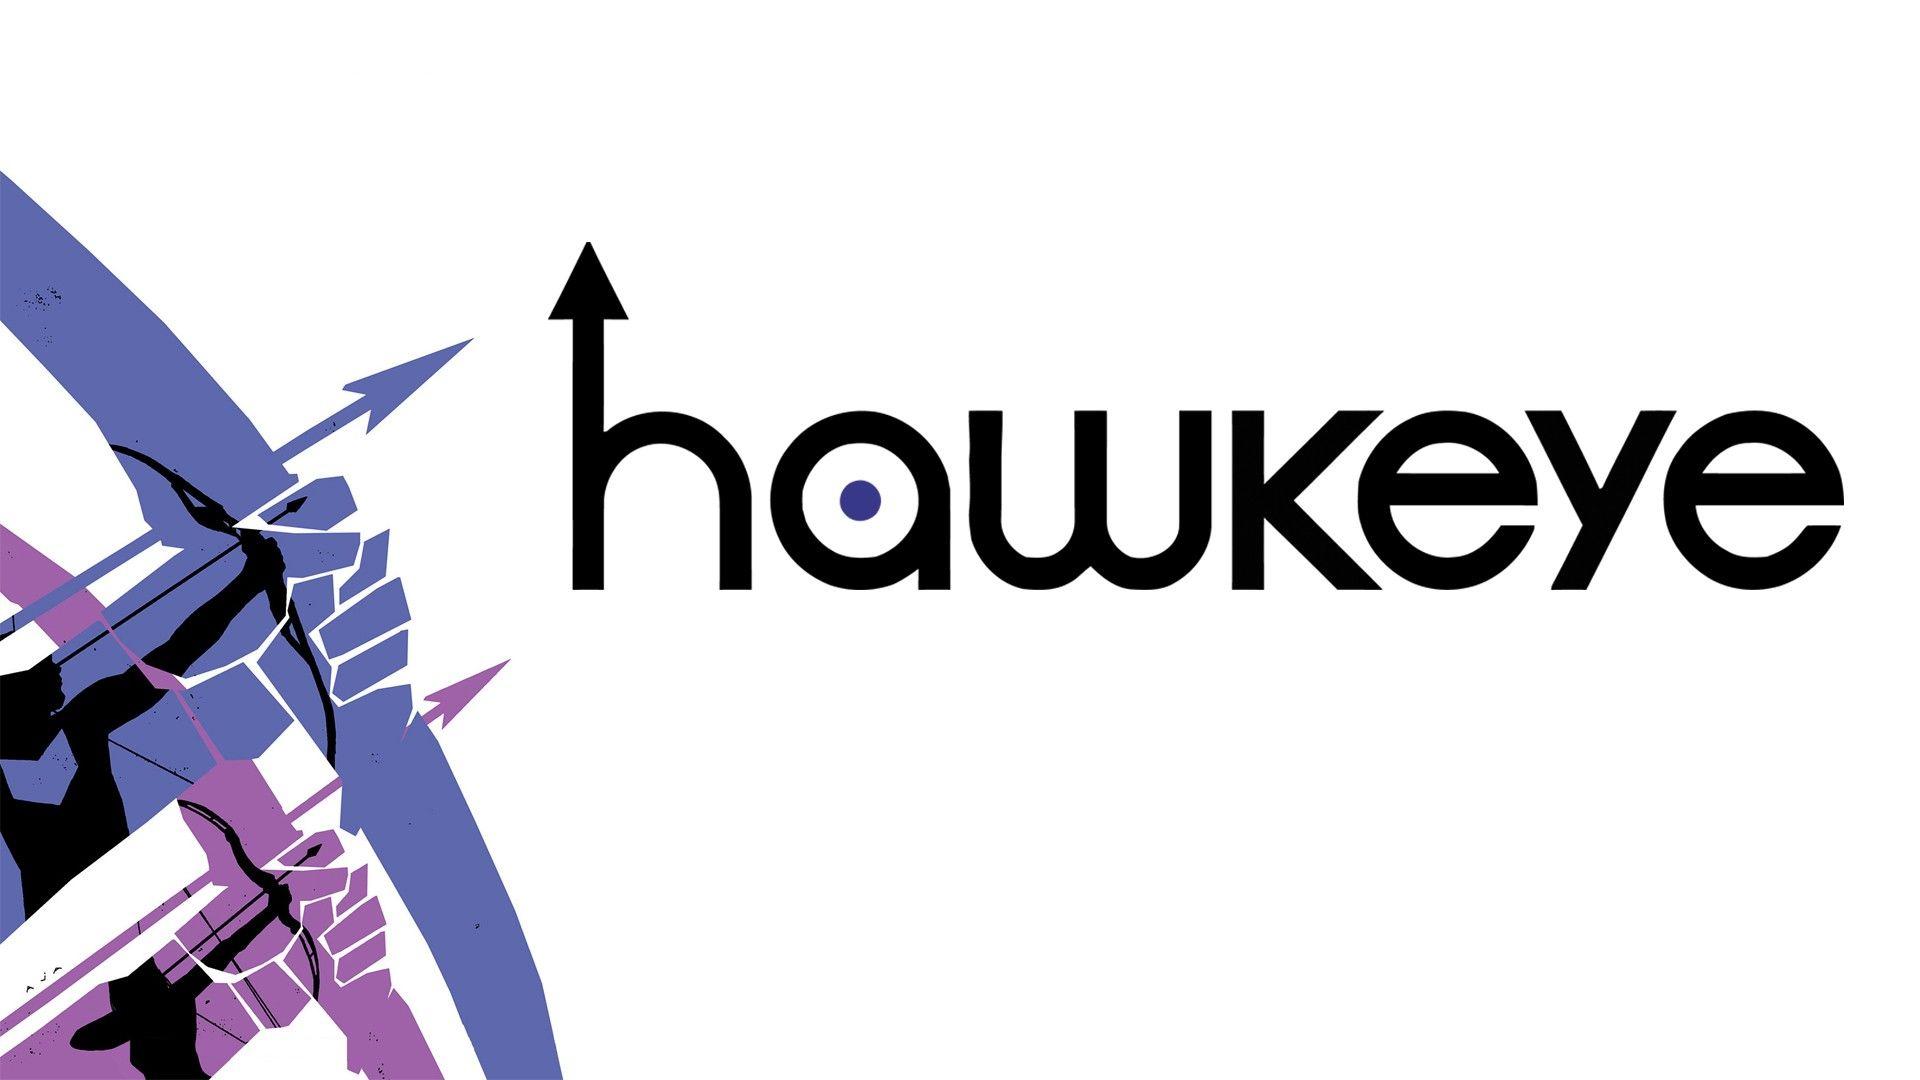 Marvel Hawkeye Logo Wallpapers - Top Free Marvel Hawkeye Logo ...